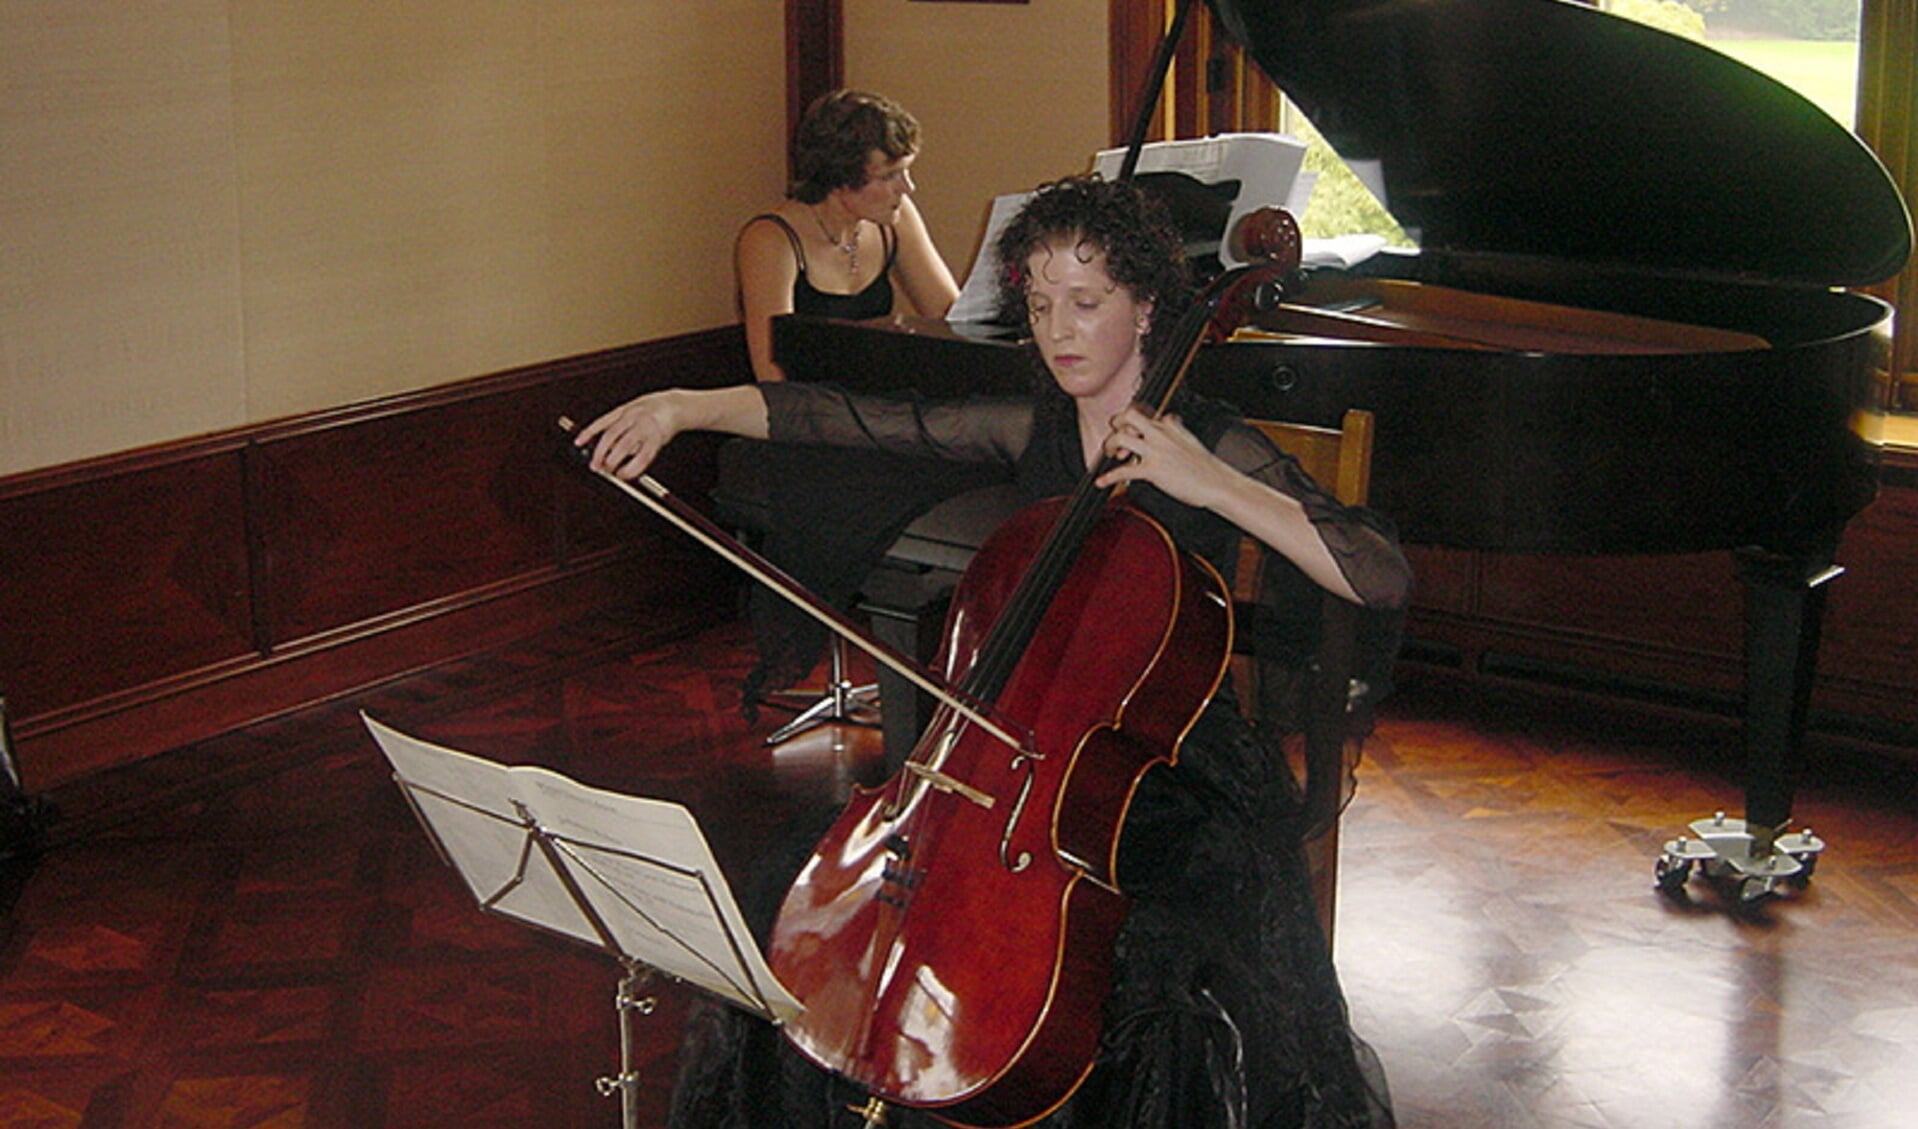 Natasja Douma vleugel en Isabel Vaz cello. | Foto: pr.